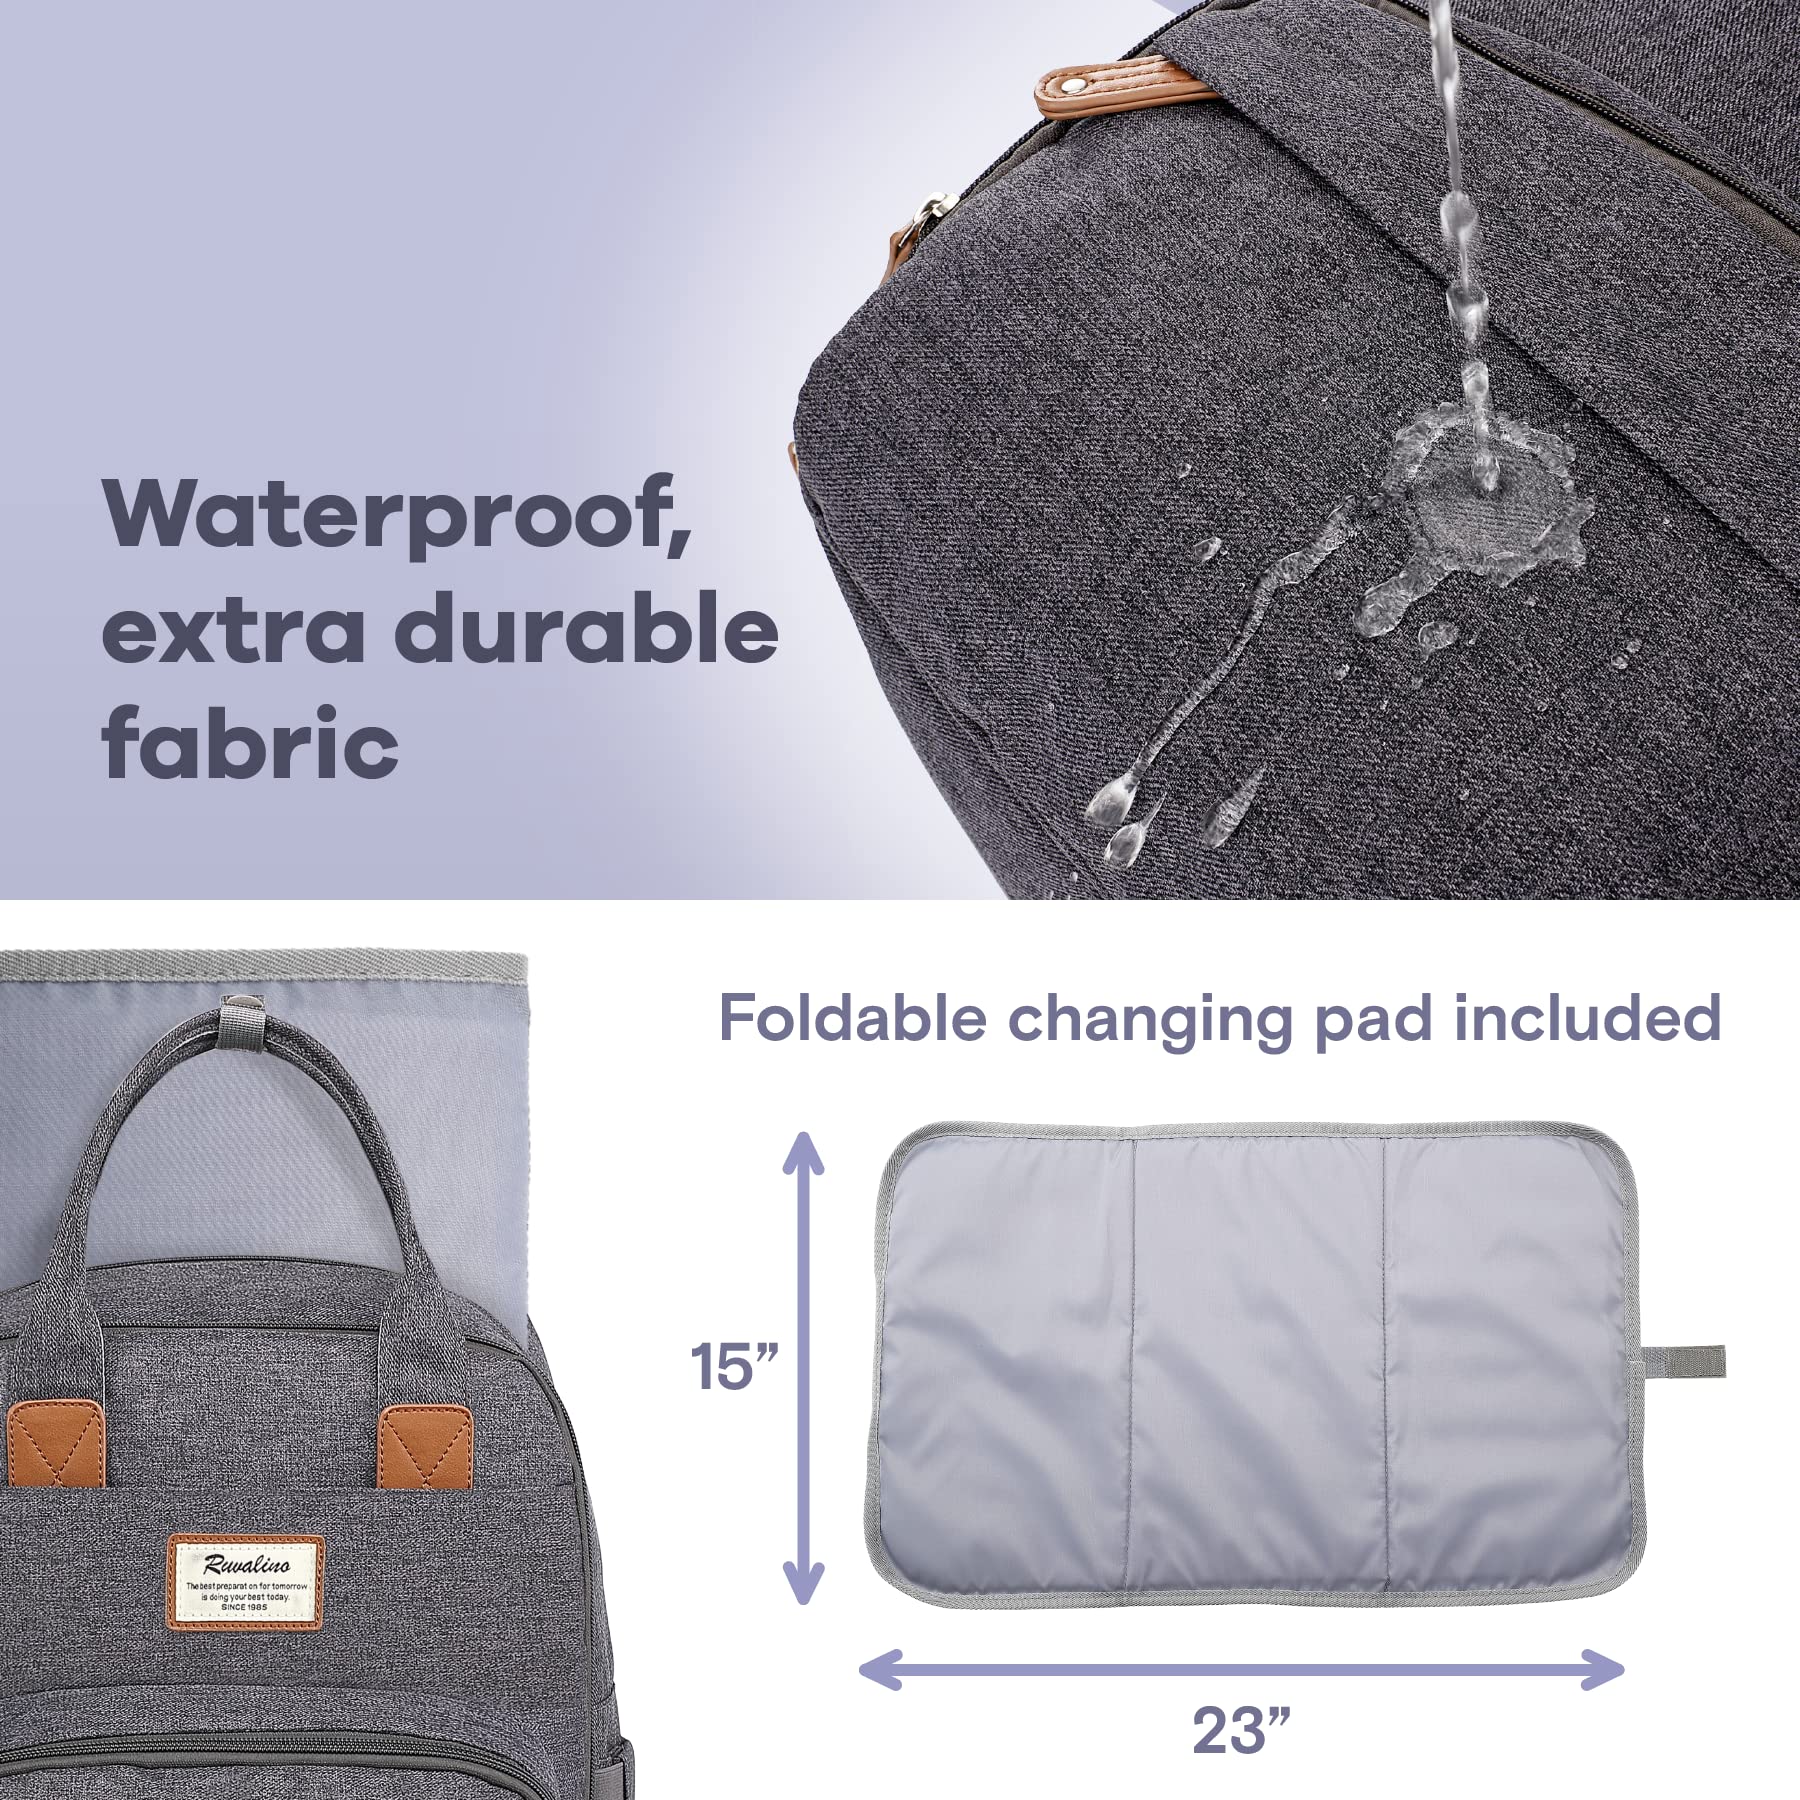 RUVALINO Diaper Bag Backpack, Multifunction Travel Back Pack Maternity Baby Changing Bags, Large Capacity, Waterproof and Stylish, Dark Gray